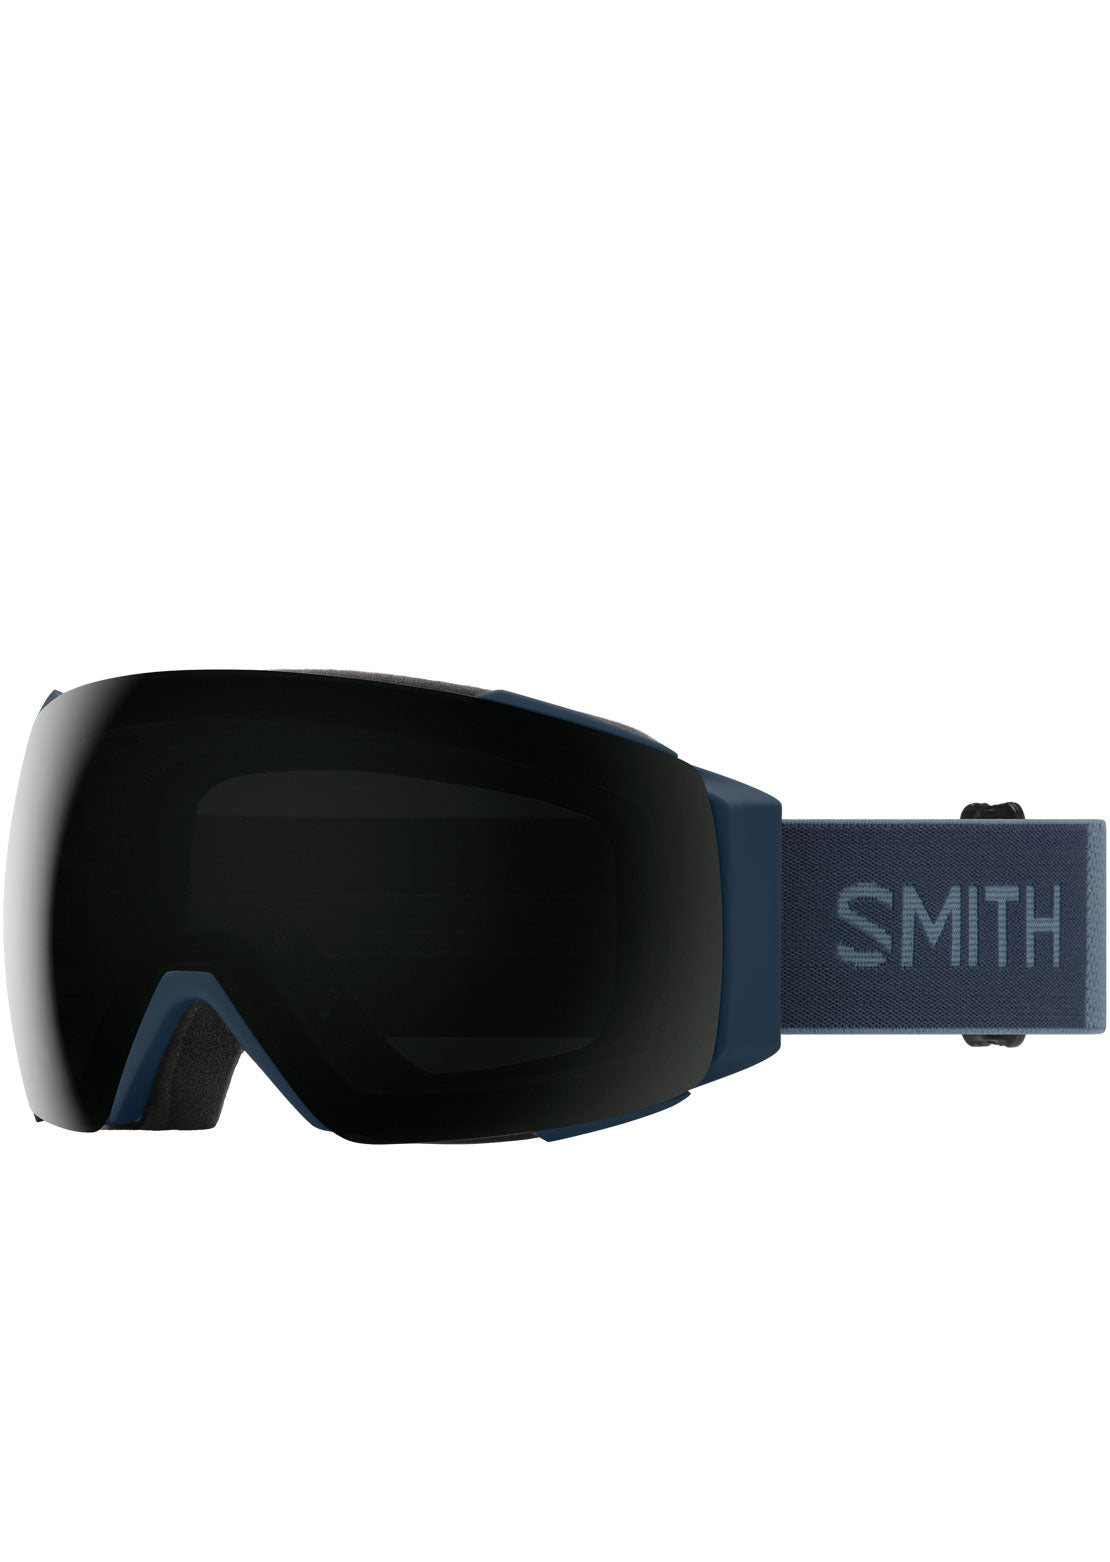 Smith I/O Mag Goggles French Navy/ChromaPop Sun Black